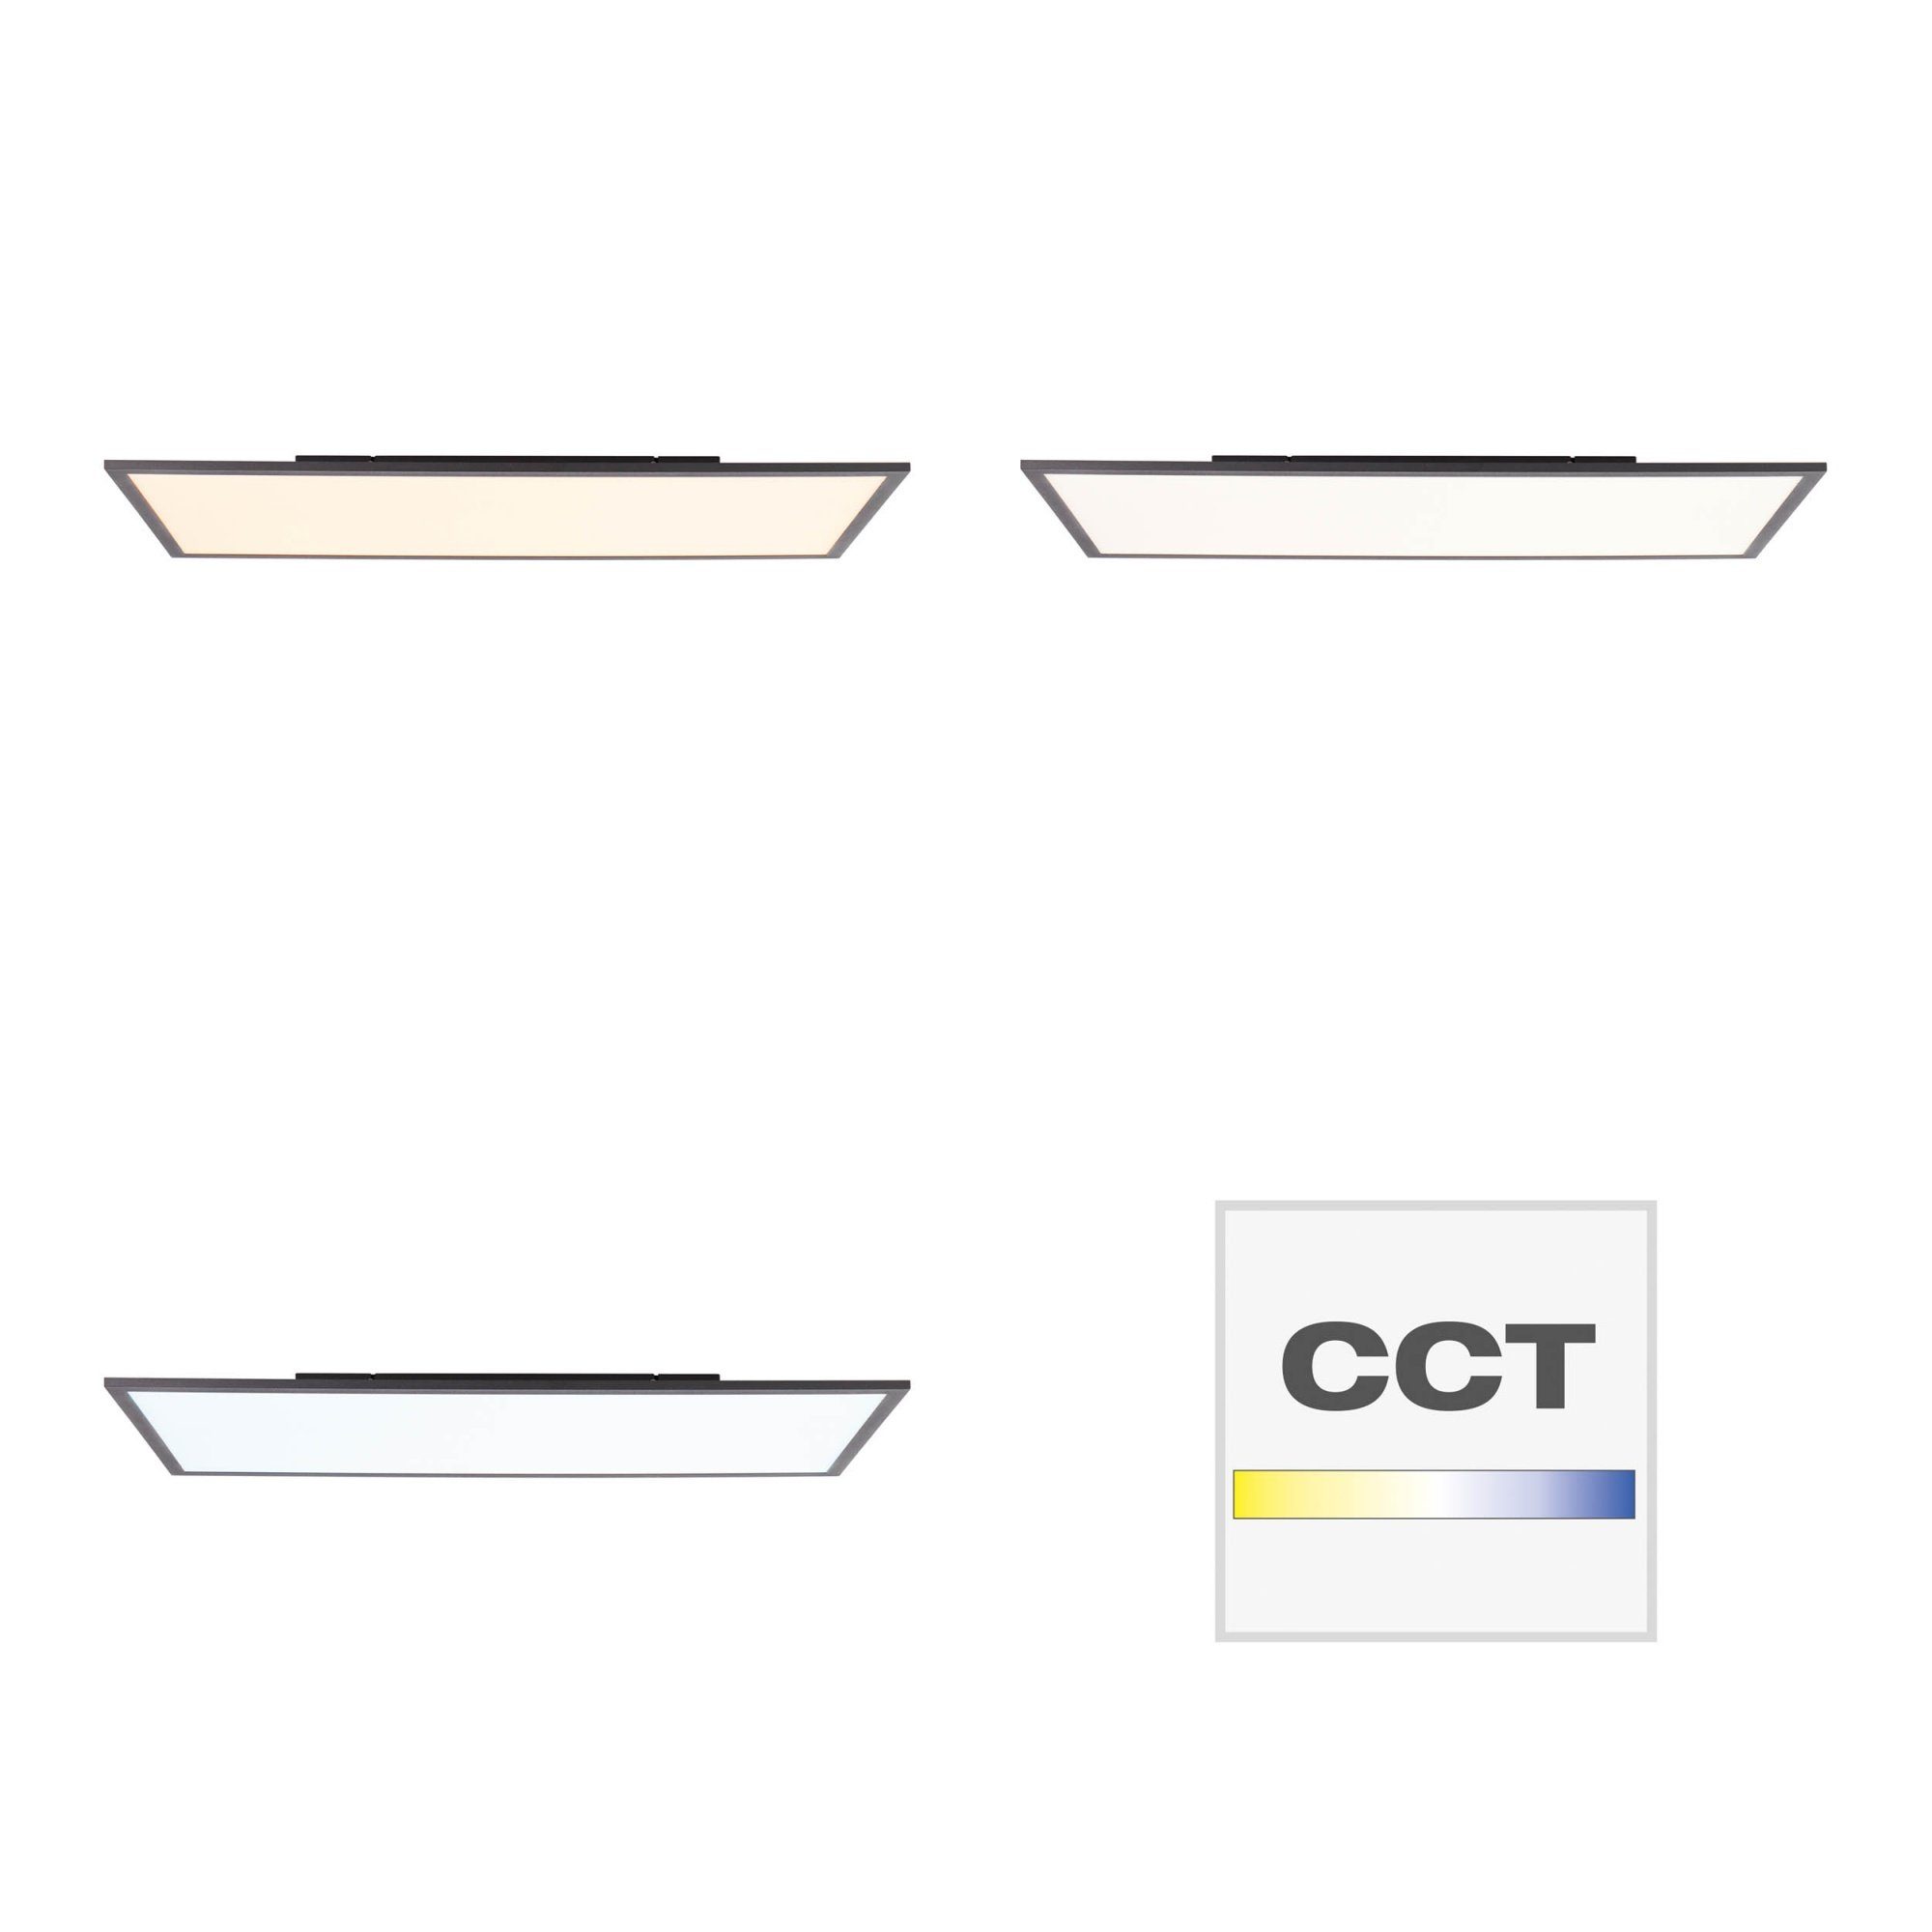 fest - LED CCT - schwarz 40 kaltweiß, LED cm, über LED Panel, 80 warmweiß Memoryfunktion, 3800 lm, CCT, Fernbedienung, Deckenleuchte, Lightbox dimmbar, x integriert,